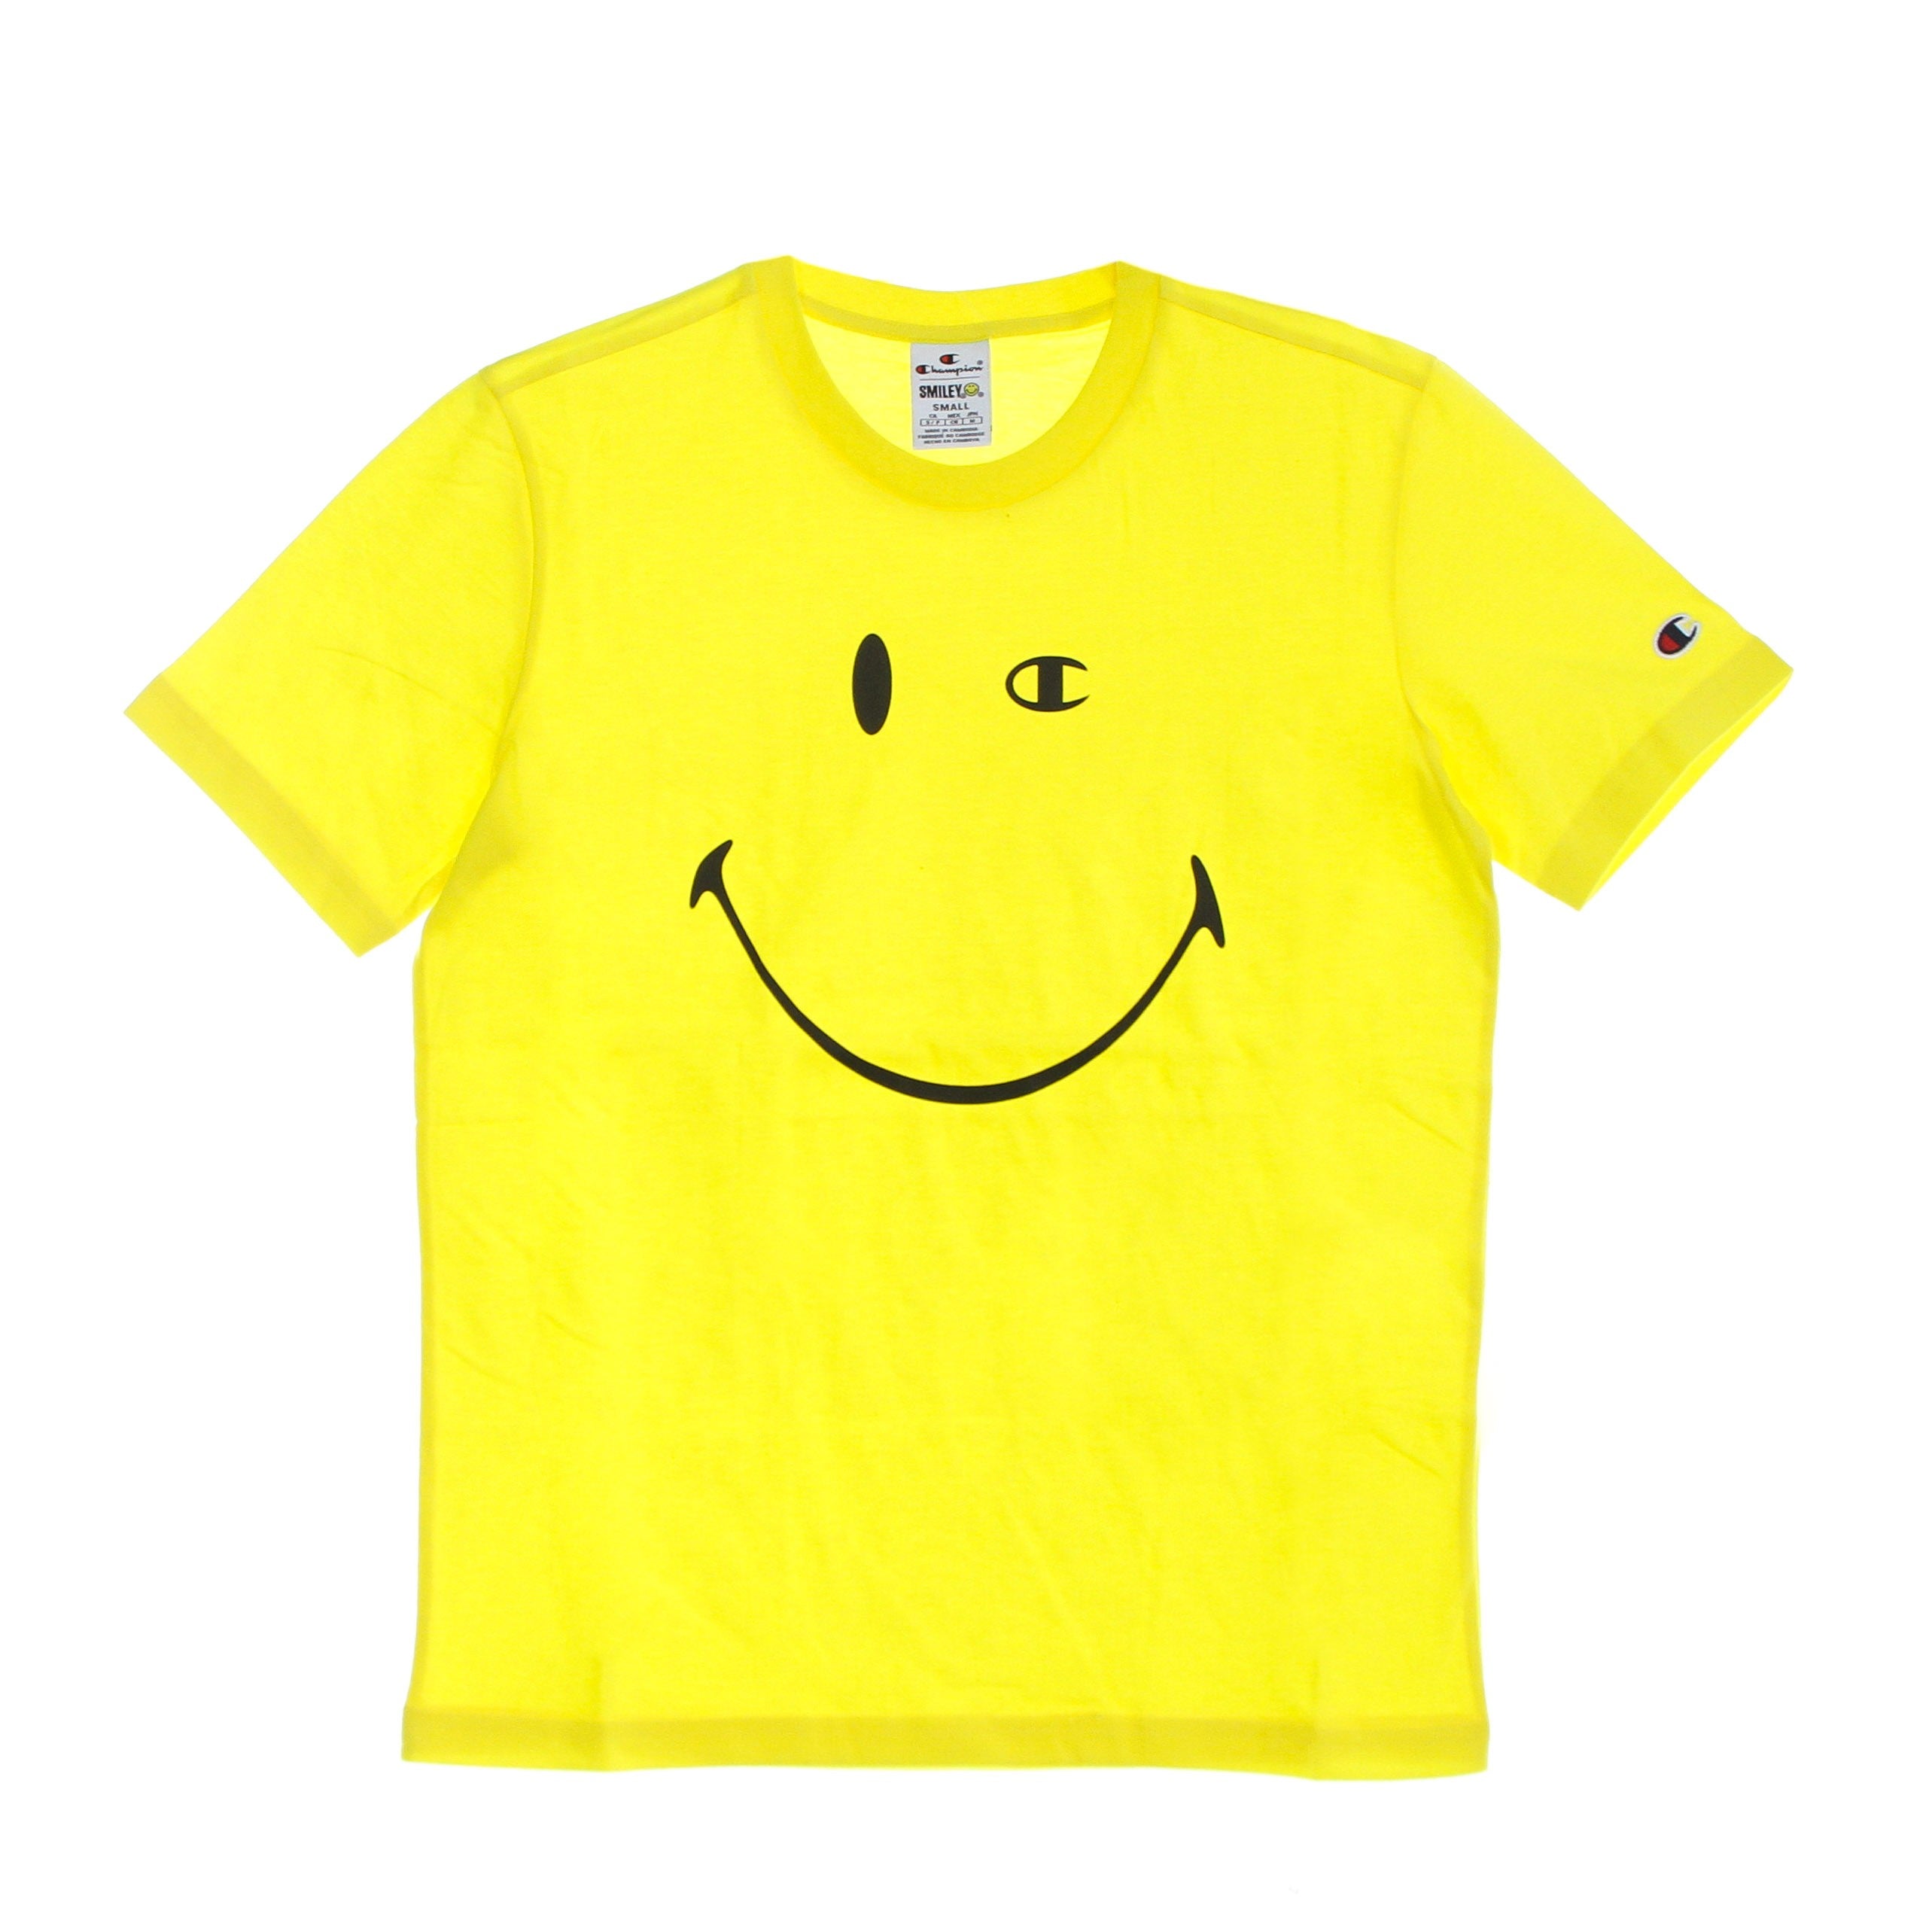 Men's Crewneck Tee X Smiley Yellow T-Shirt